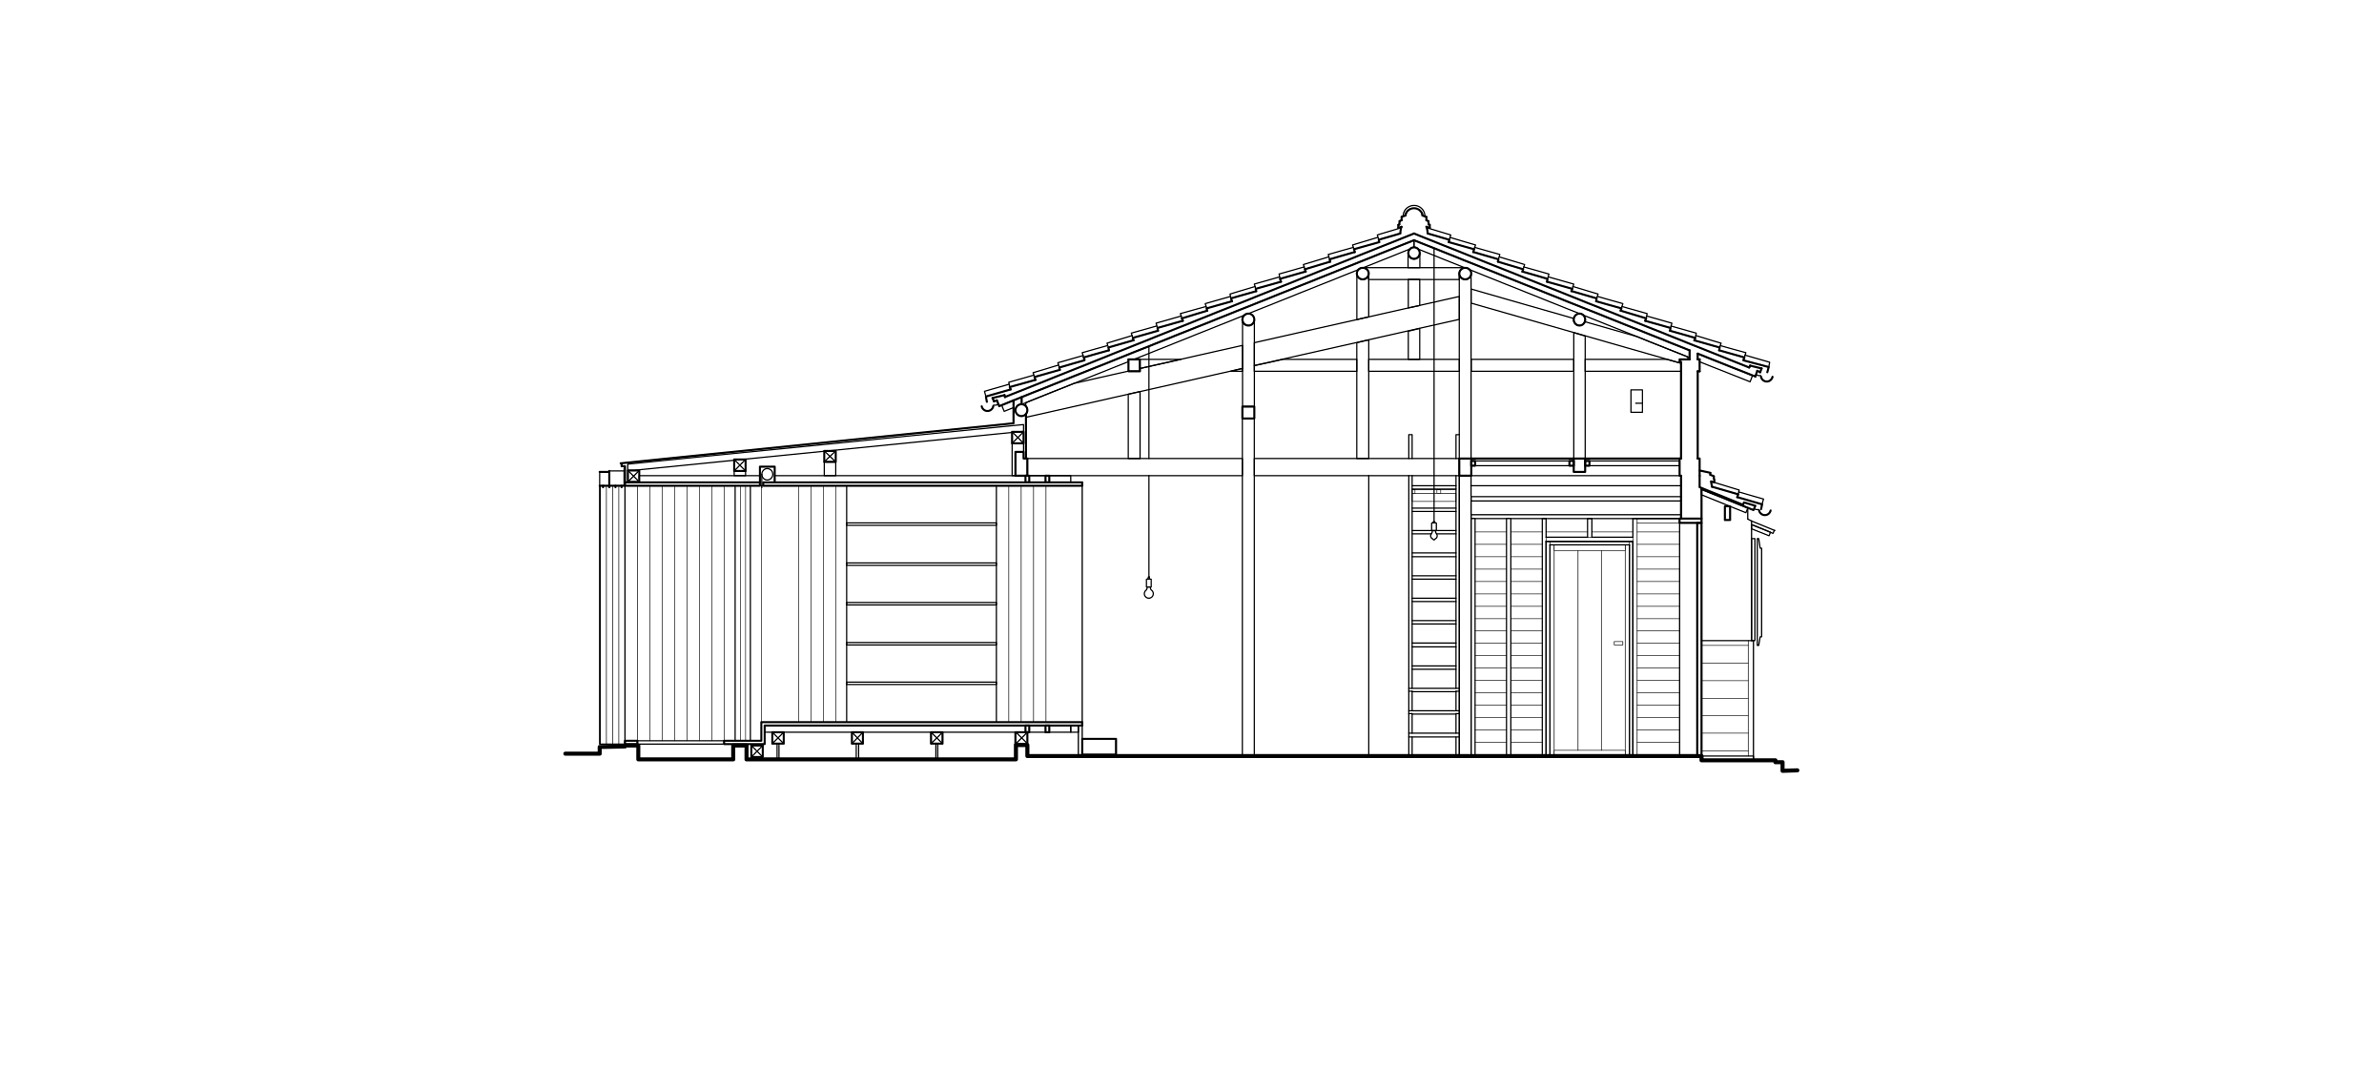 Sketch Of Modern House - Villa, Terrace And Garden Illustration 25535398 -  Megapixl